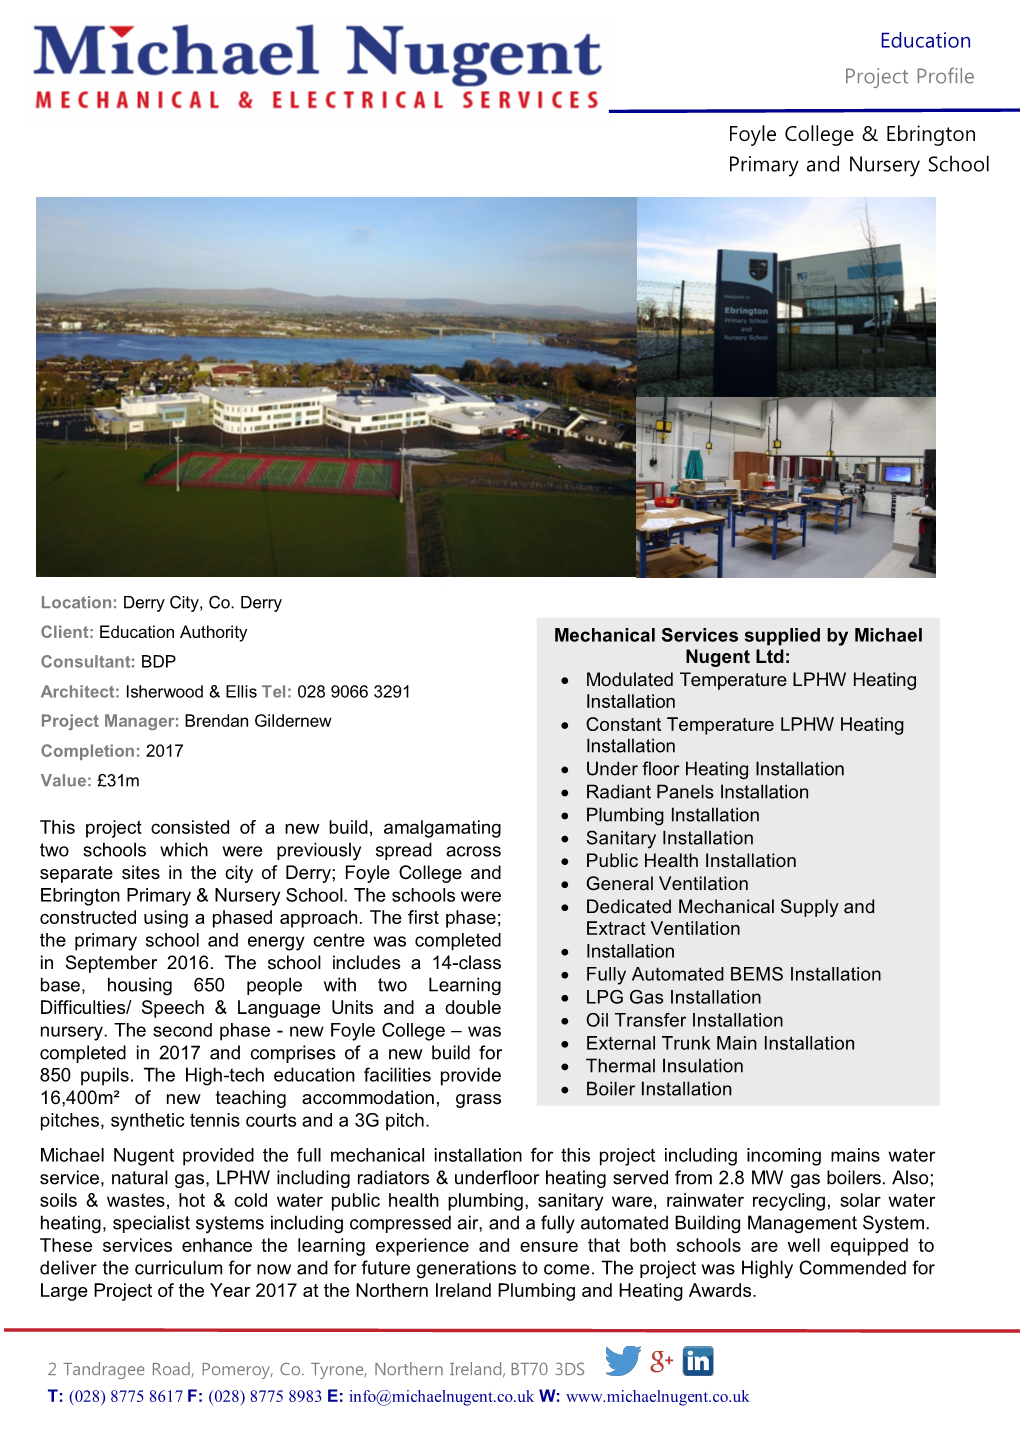 Education Project Profile Foyle College & Ebrington Primary And